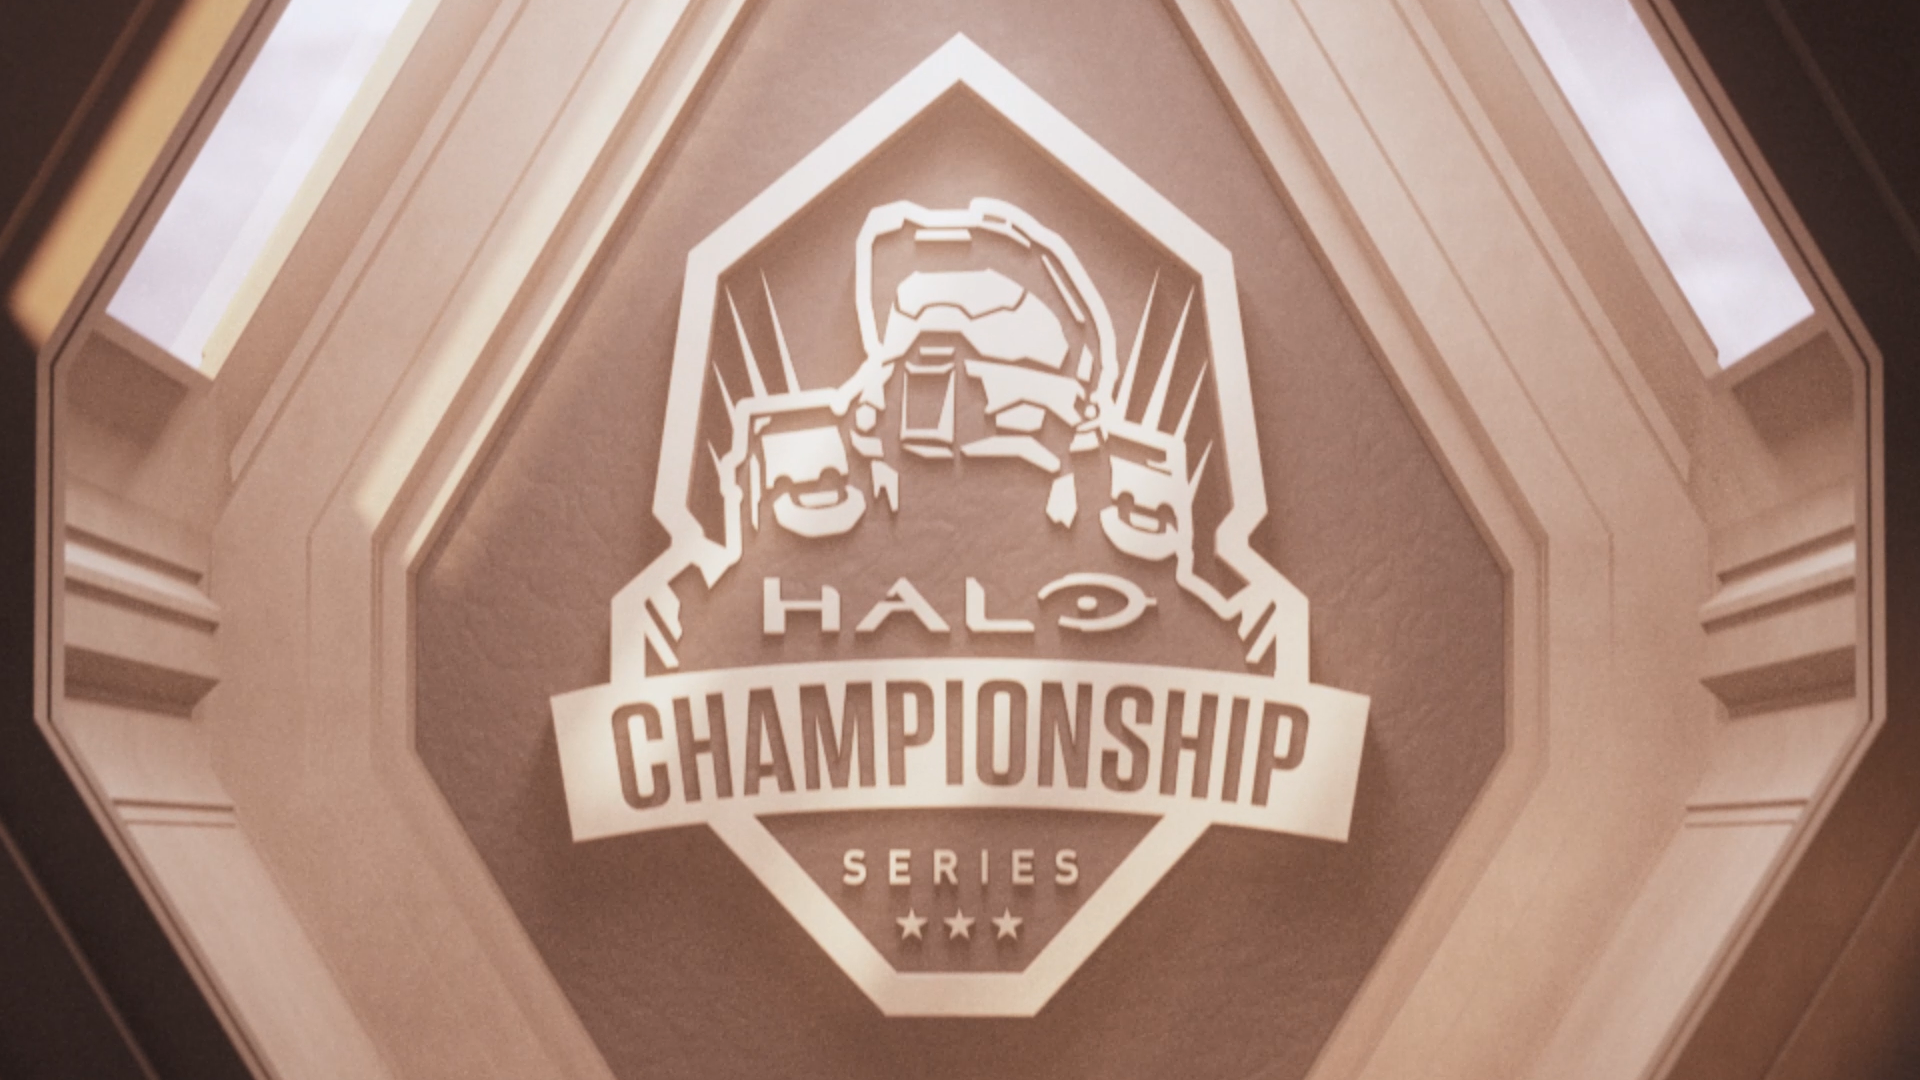 Halo Championship Series Logo on stone wall ultra-wide